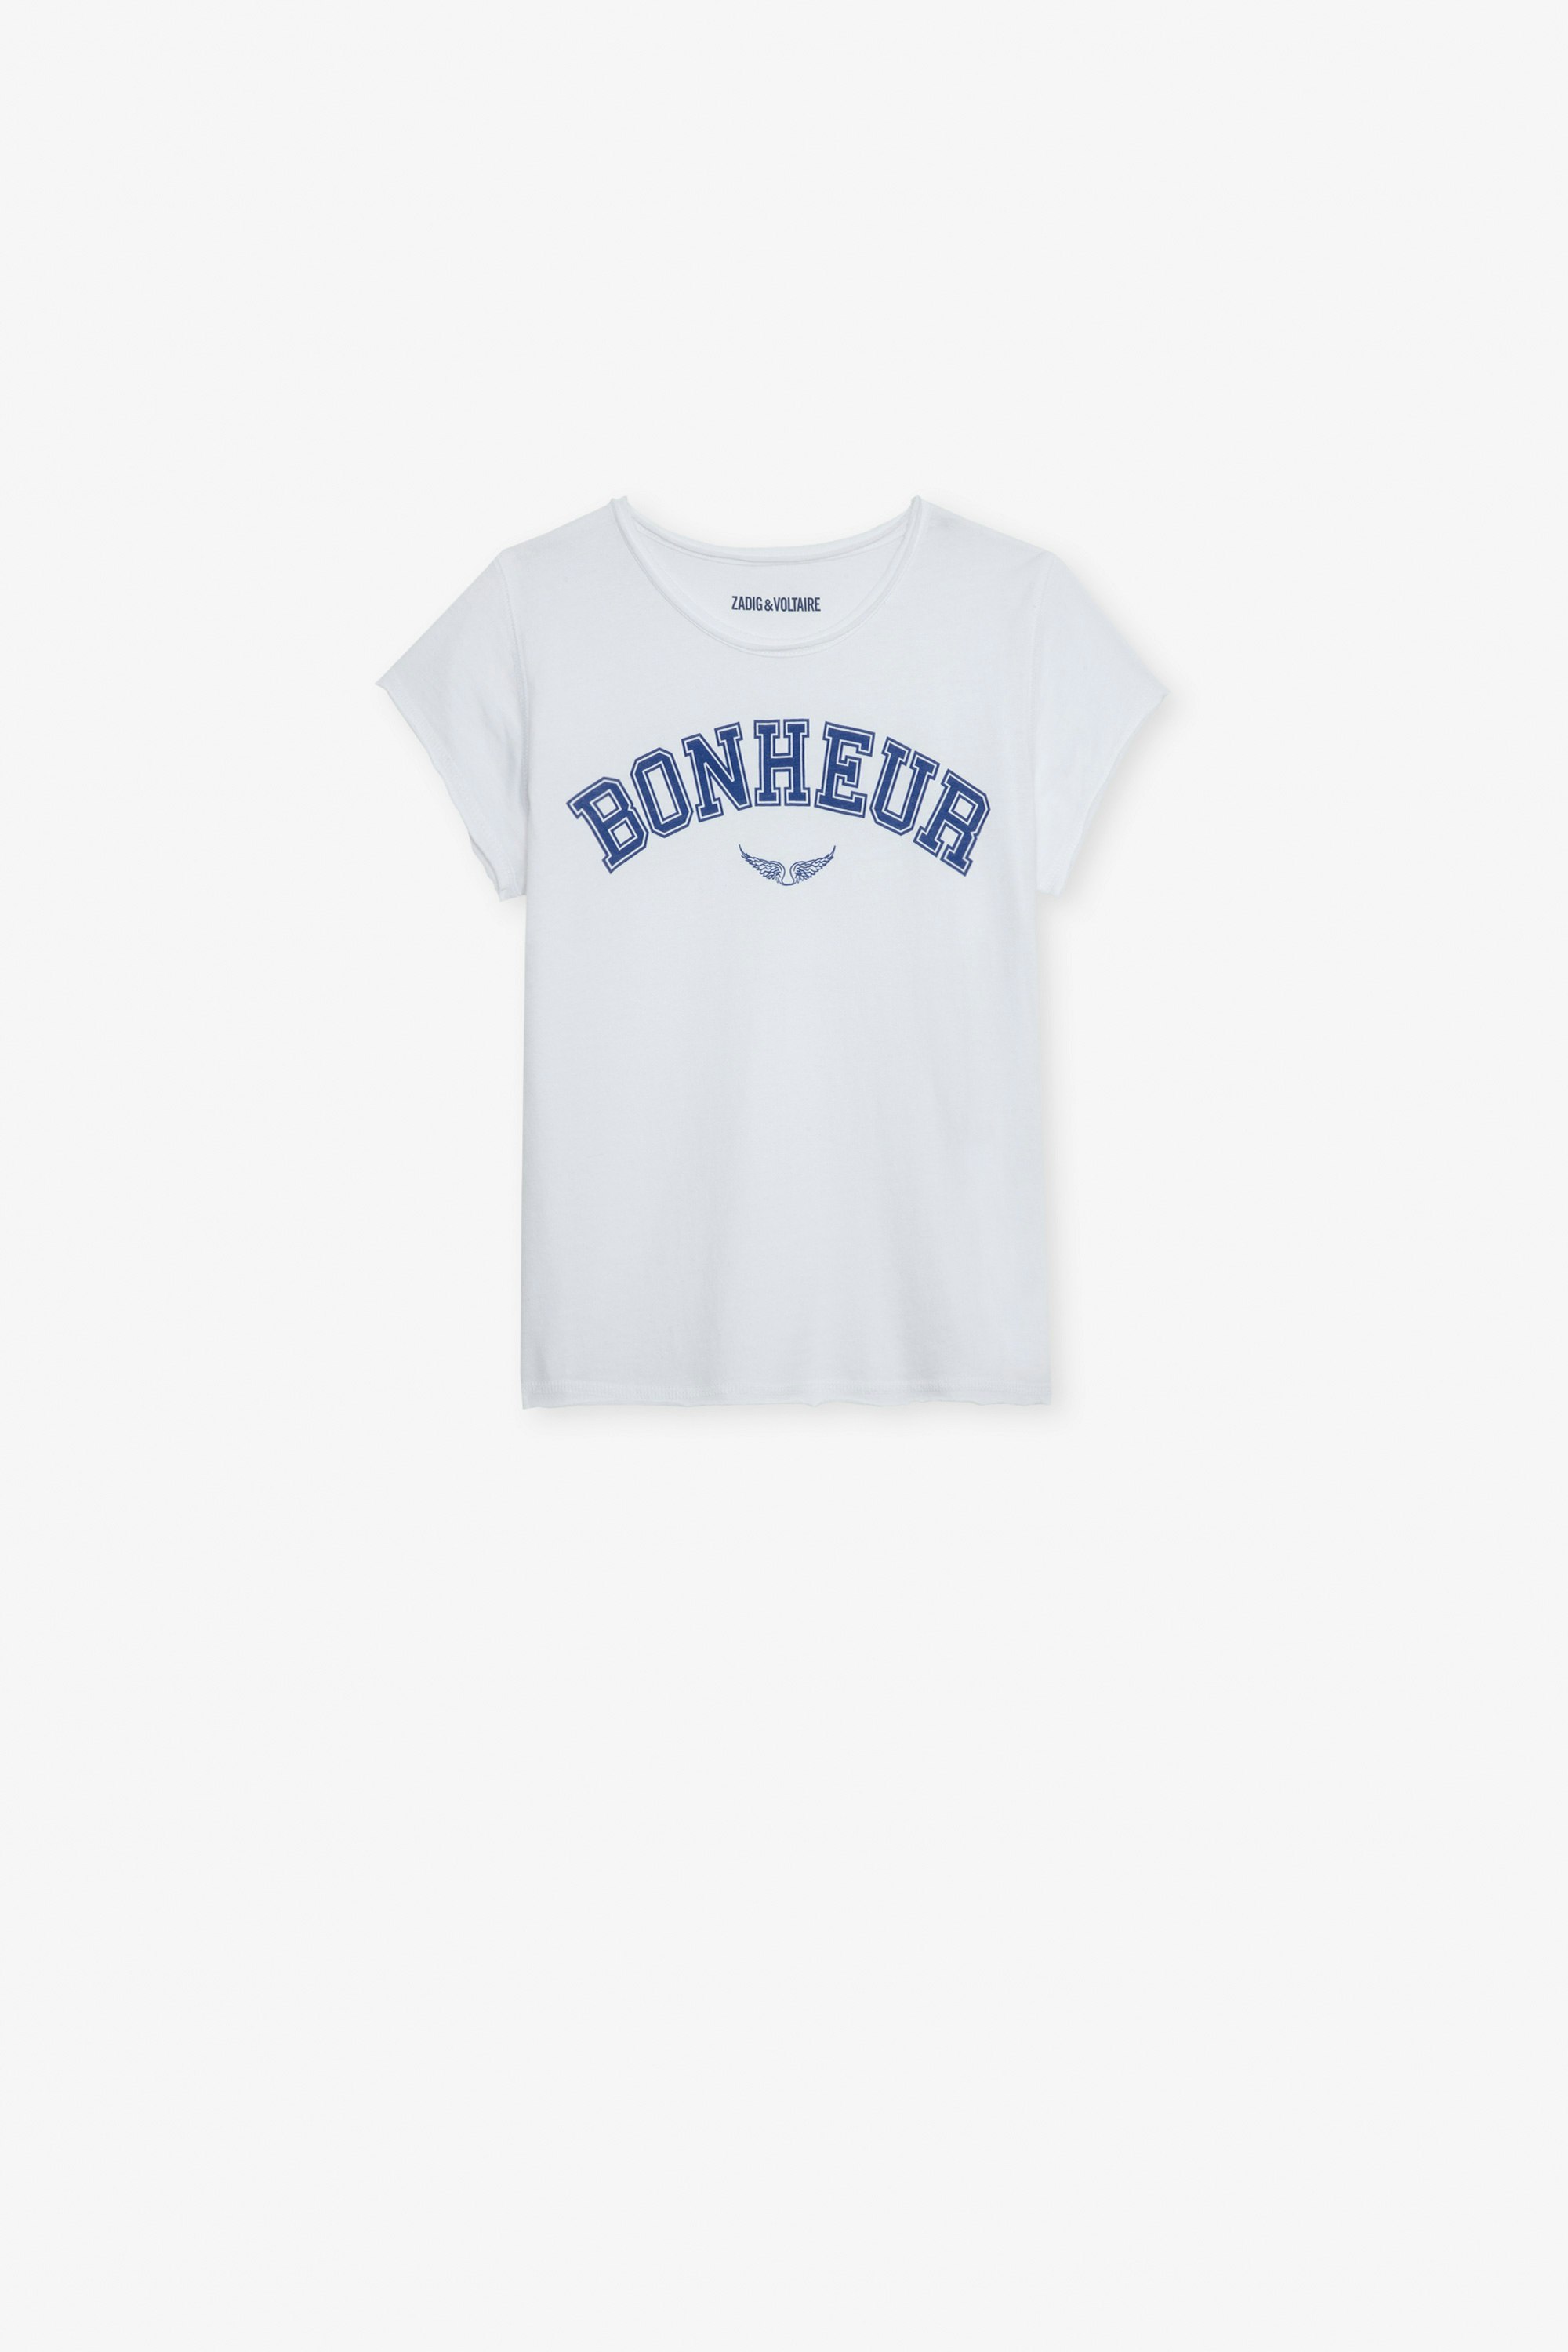 T-shirt Amber Bambina - T-shirt a maniche corte in jersey di cotone bianca con scritta "Bonheur" da bambina.